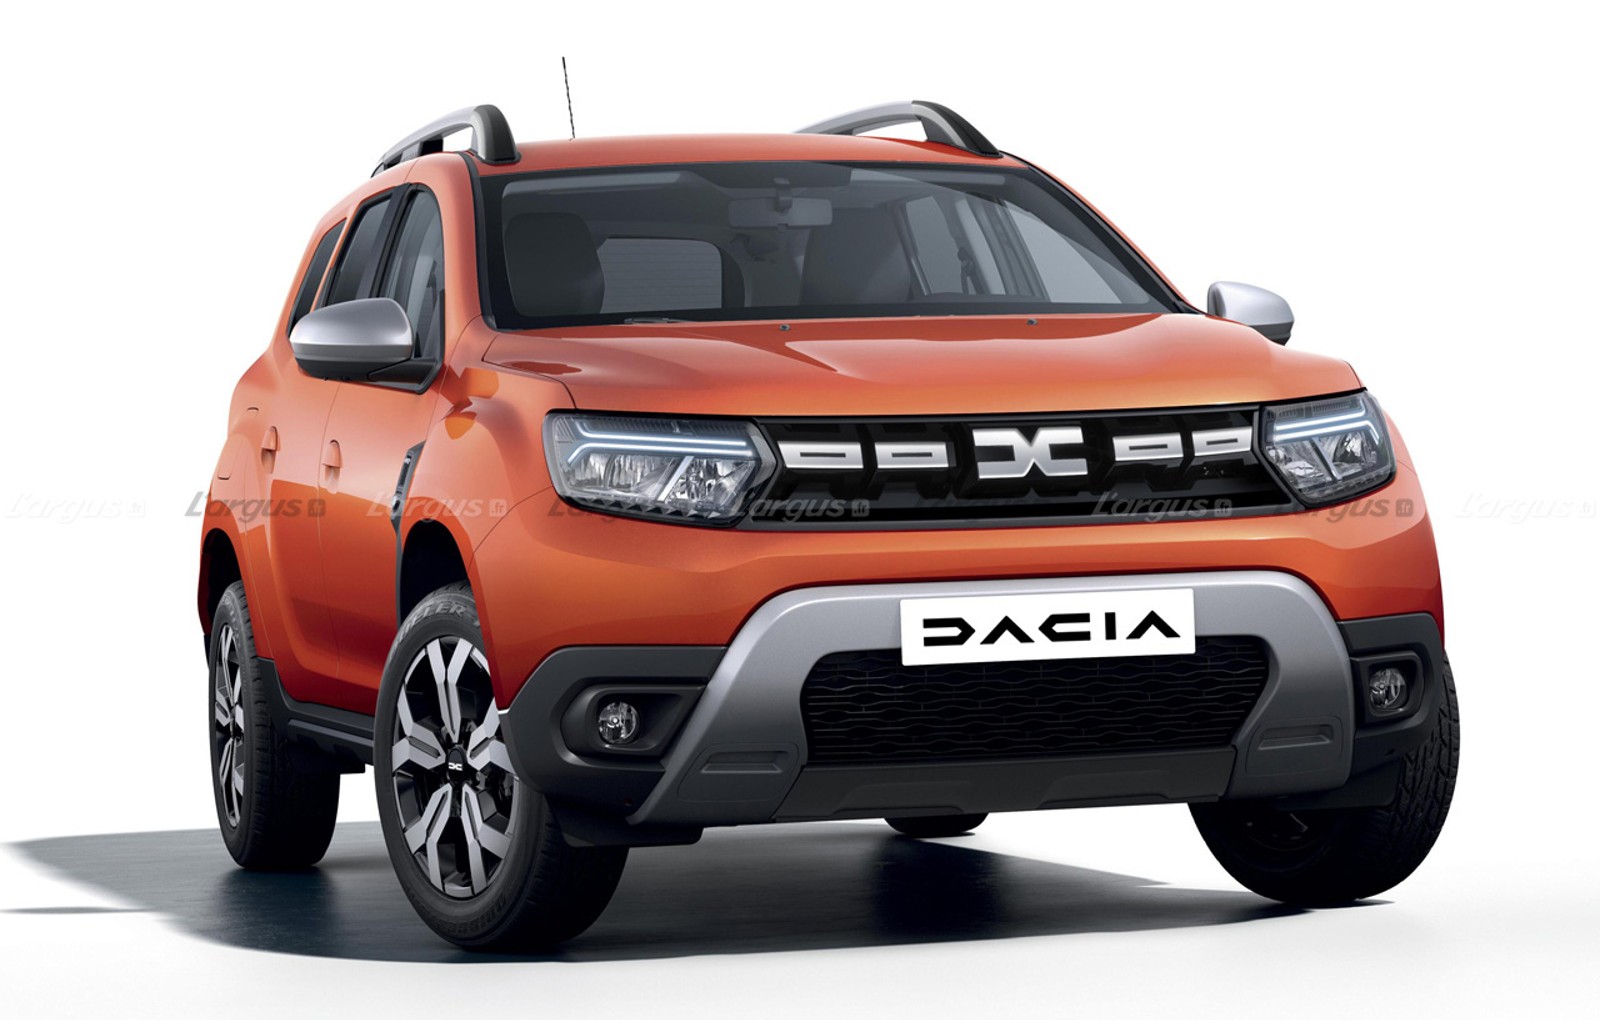 Dacia pune noua sa siglă pe toate modelele, din 16 iunie